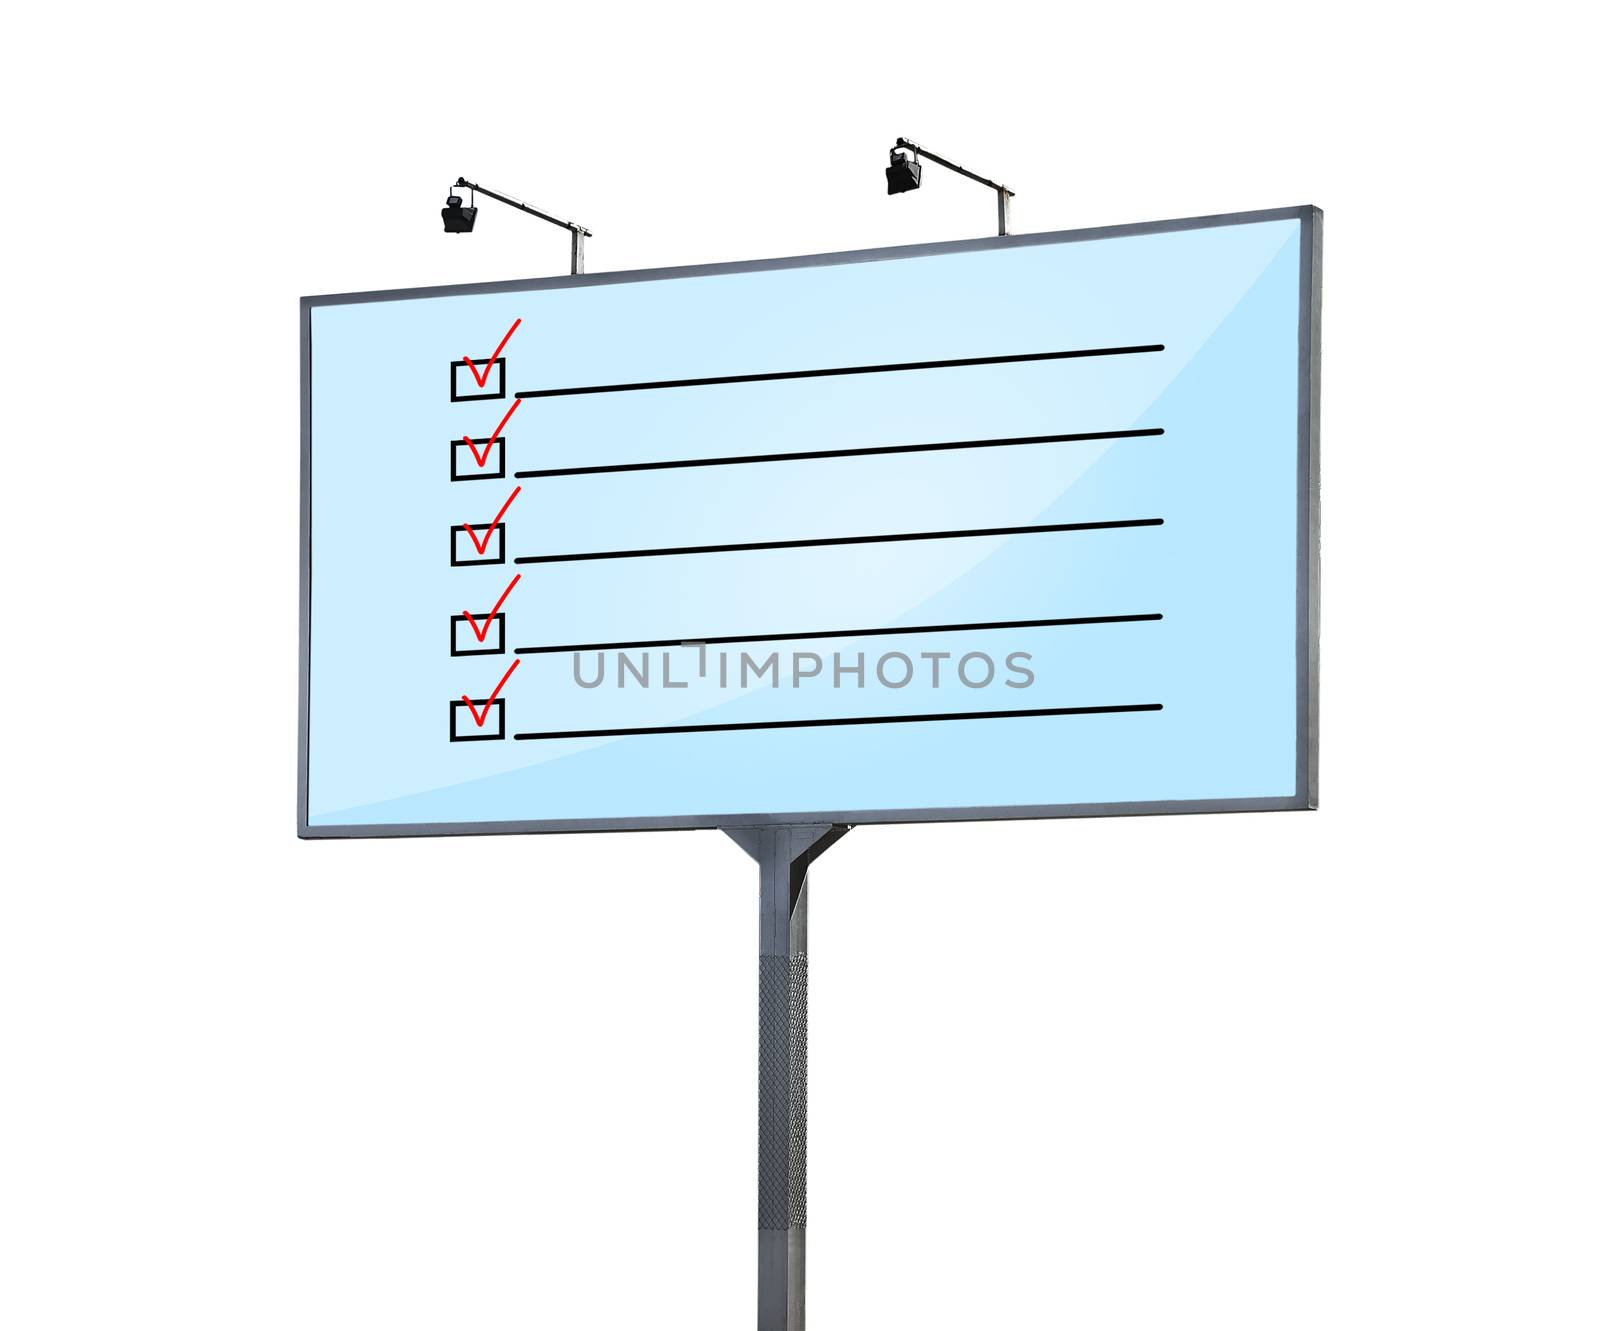 checklist on billboard by vetkit